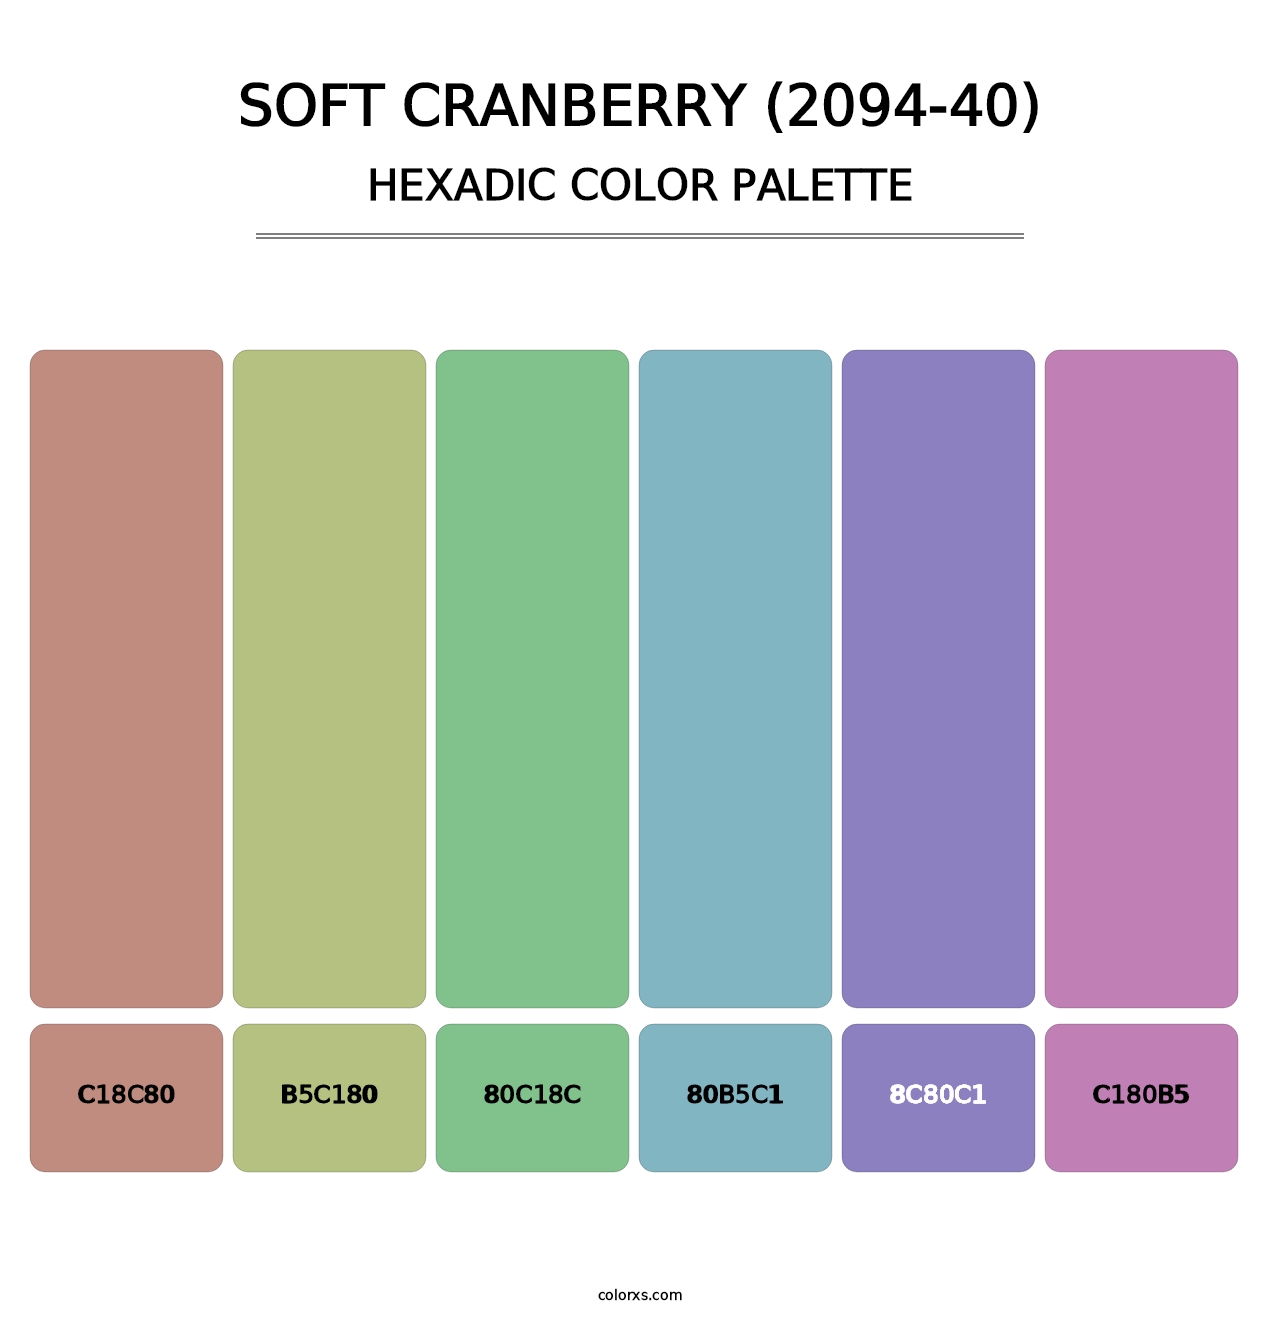 Soft Cranberry (2094-40) - Hexadic Color Palette